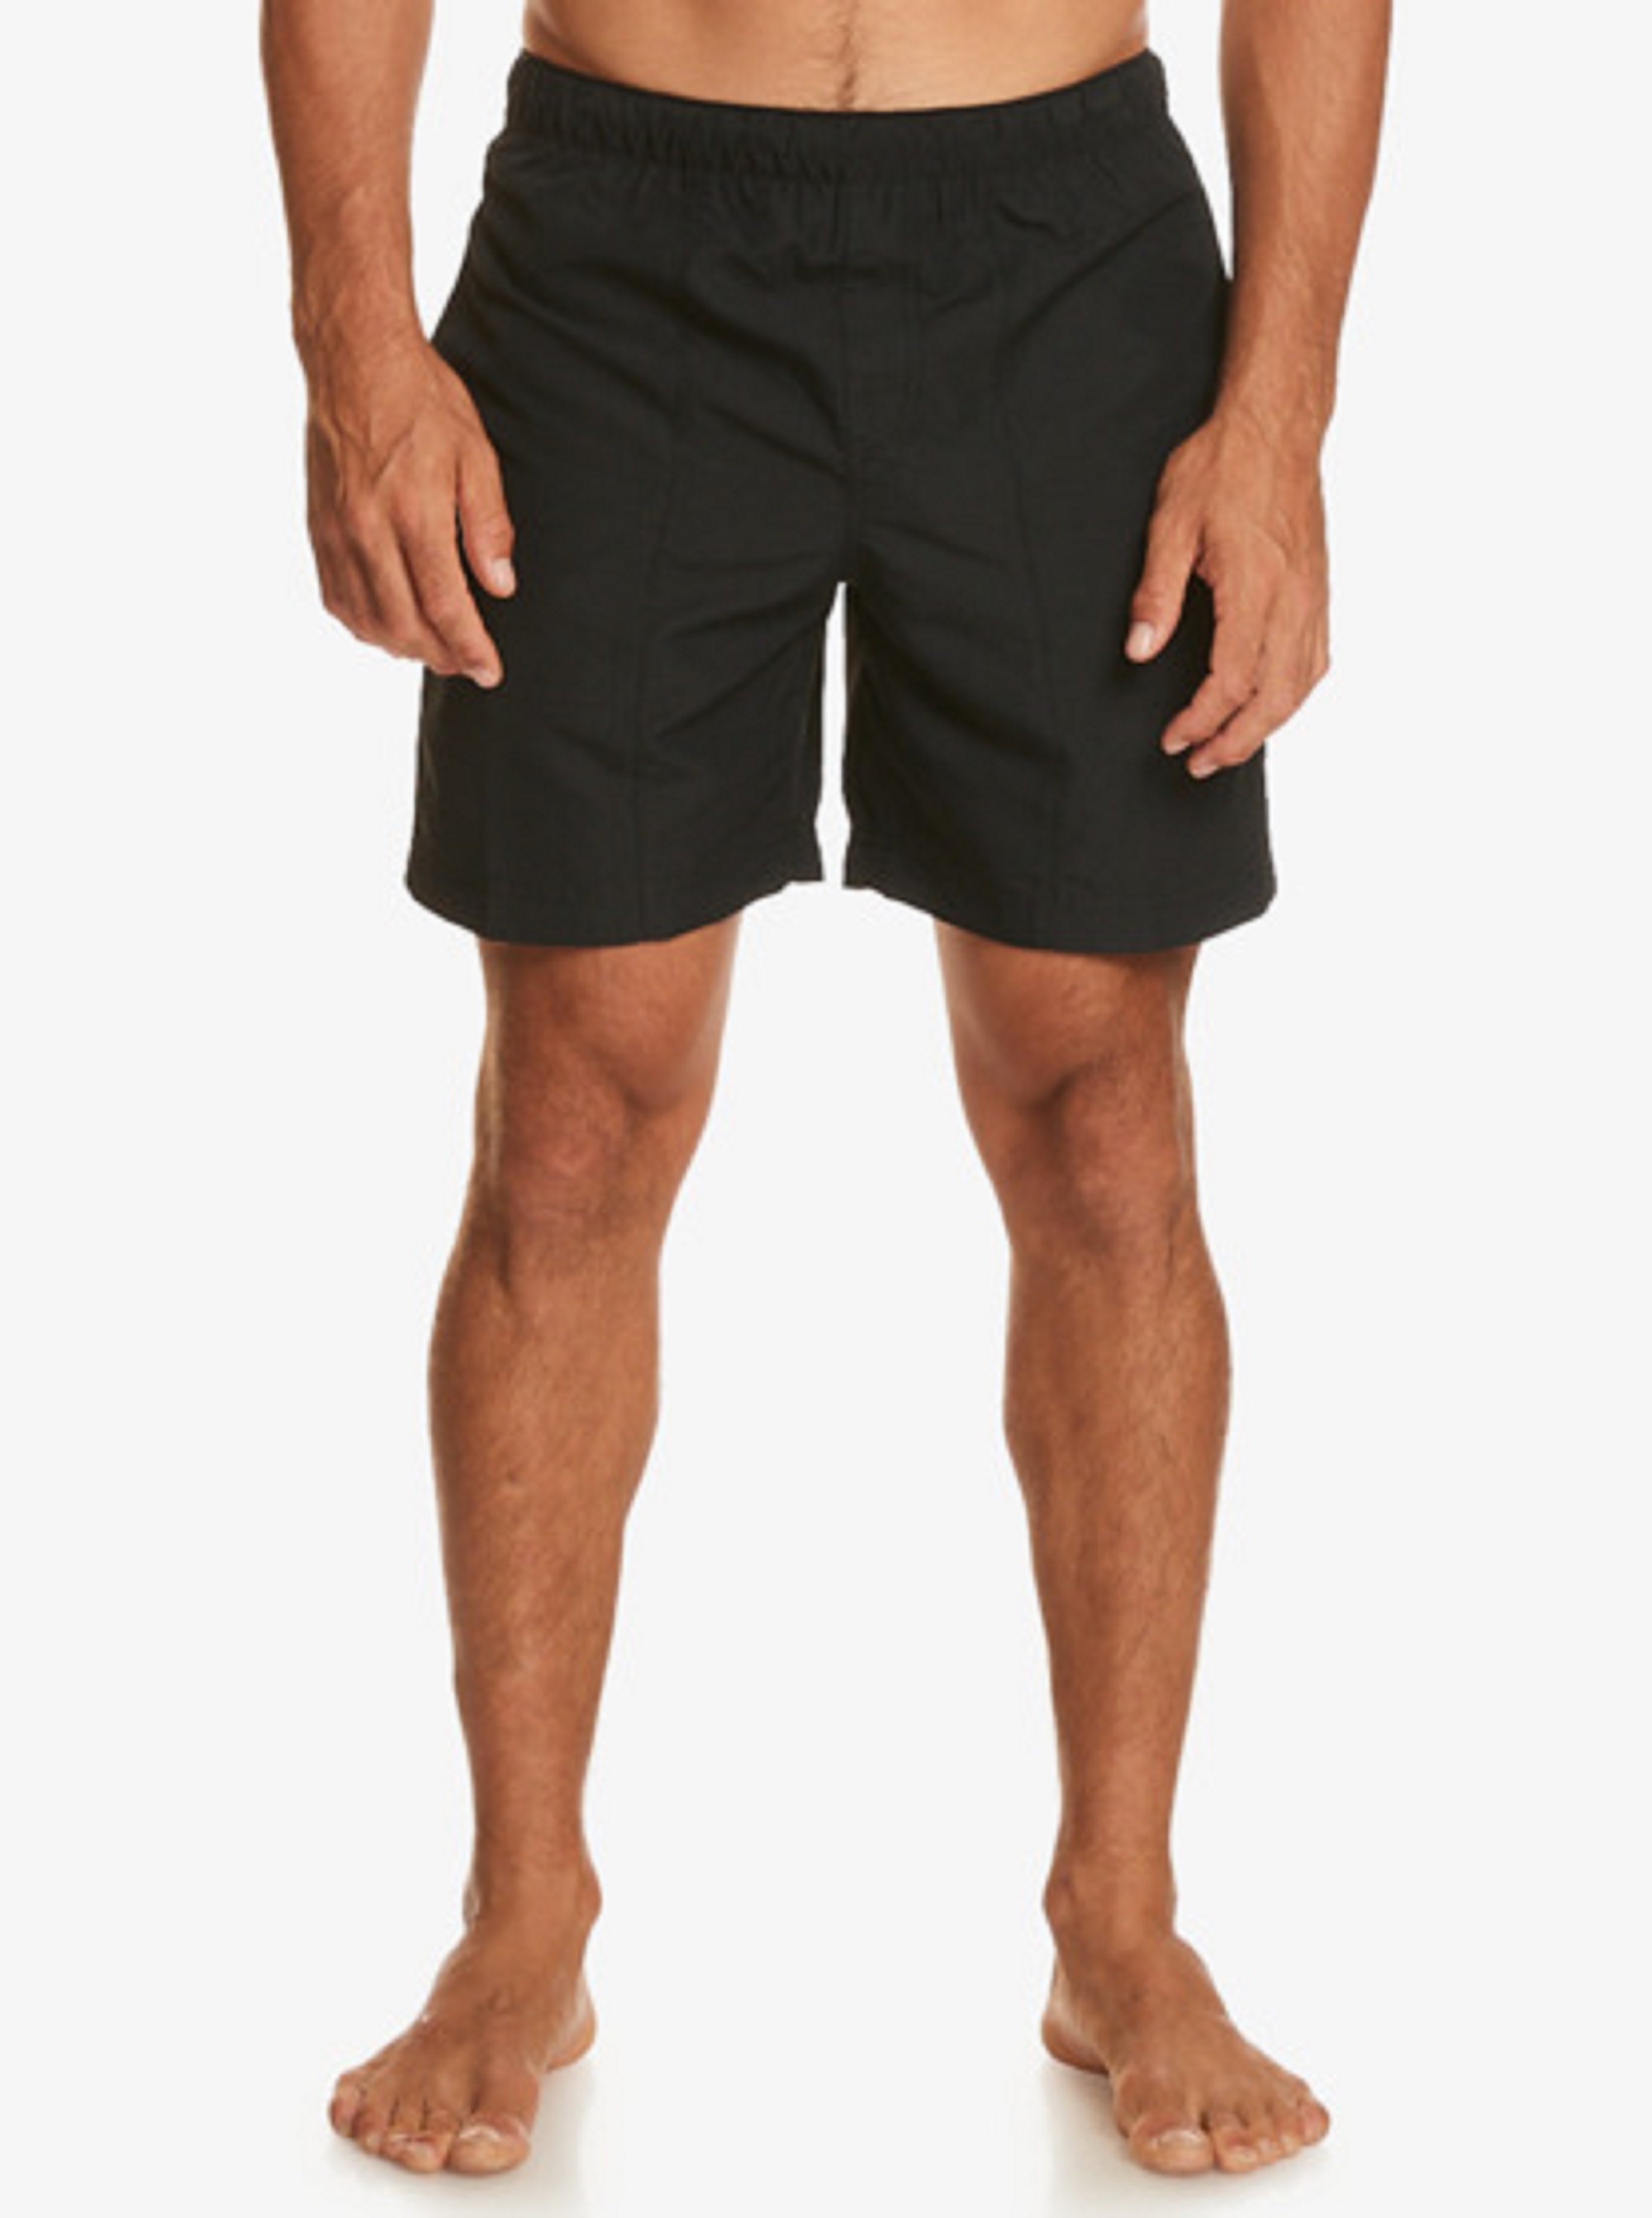 Man wearing Quicksilver board shorts